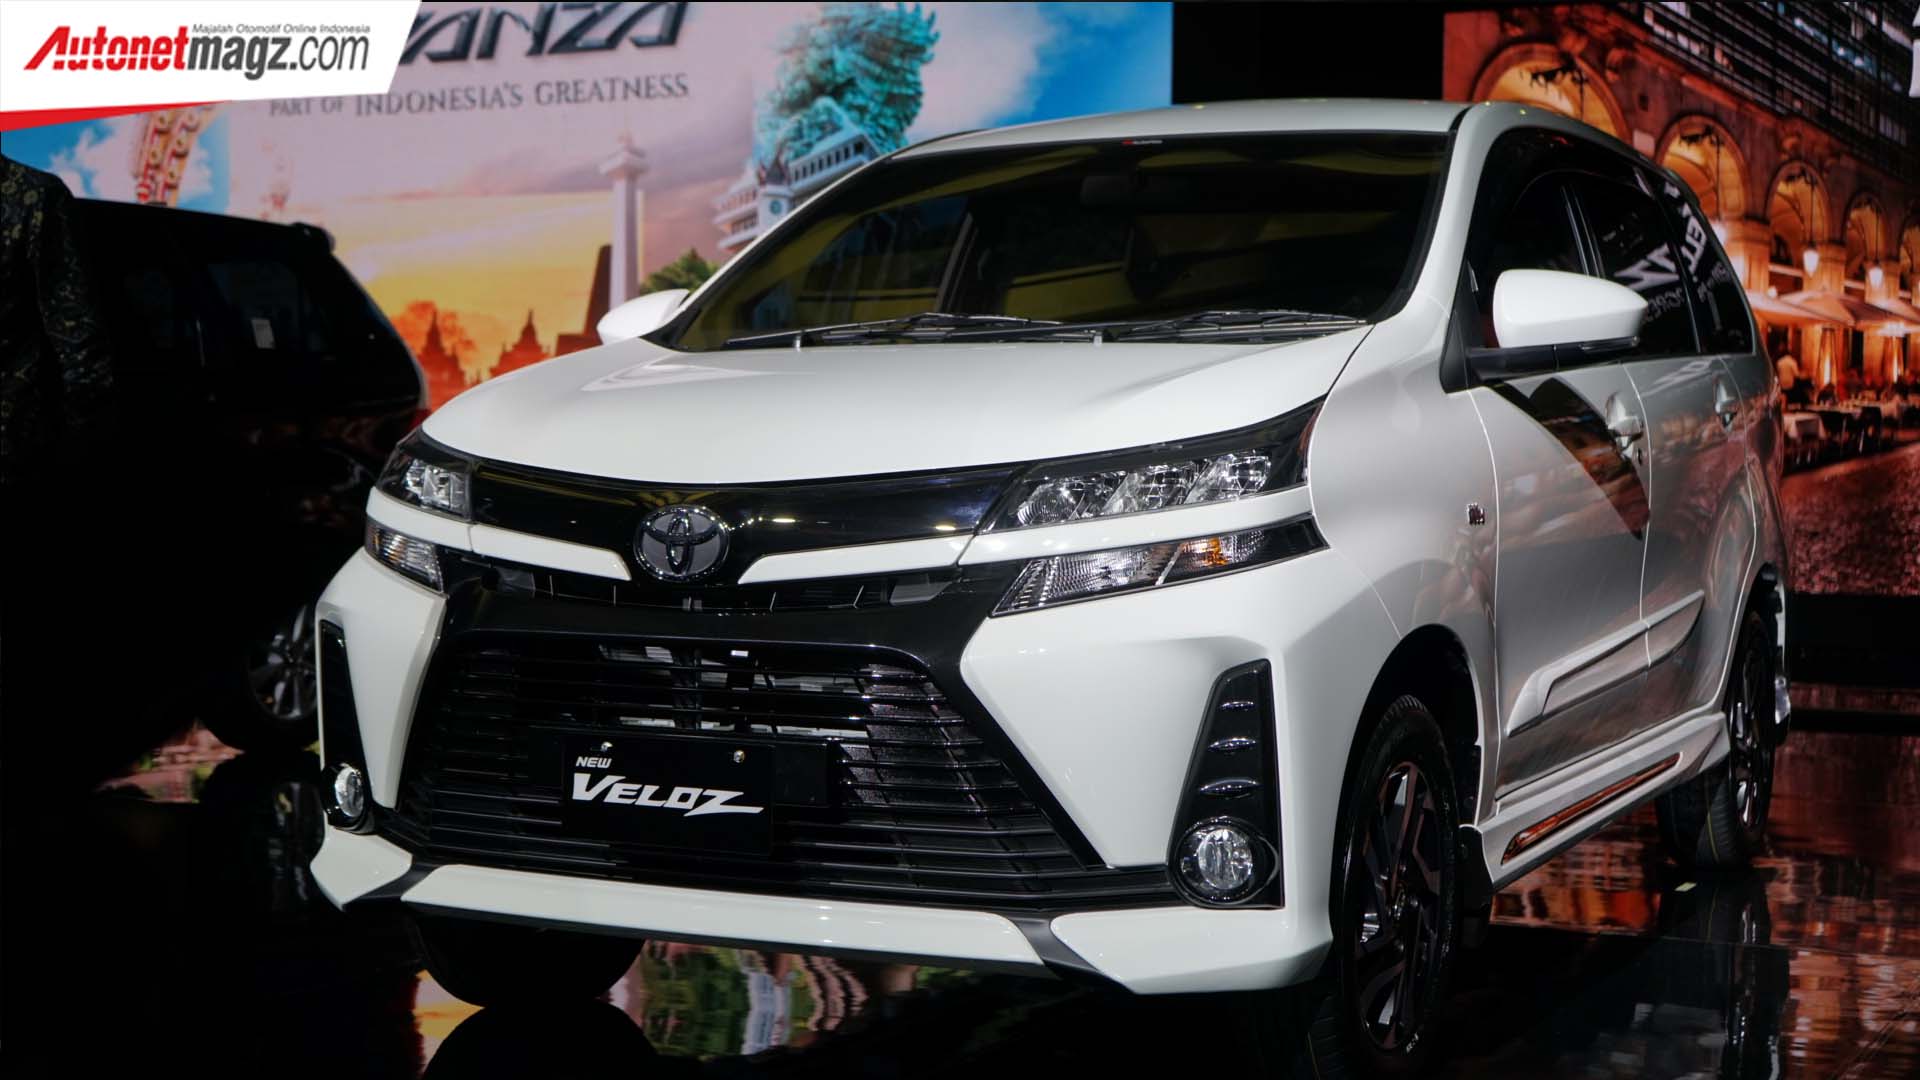 Berita, New Toyota Avanza Veloz 2019 Pricelist: Harga New Toyota Avanza & Veloz 2019 Tidak Naik!